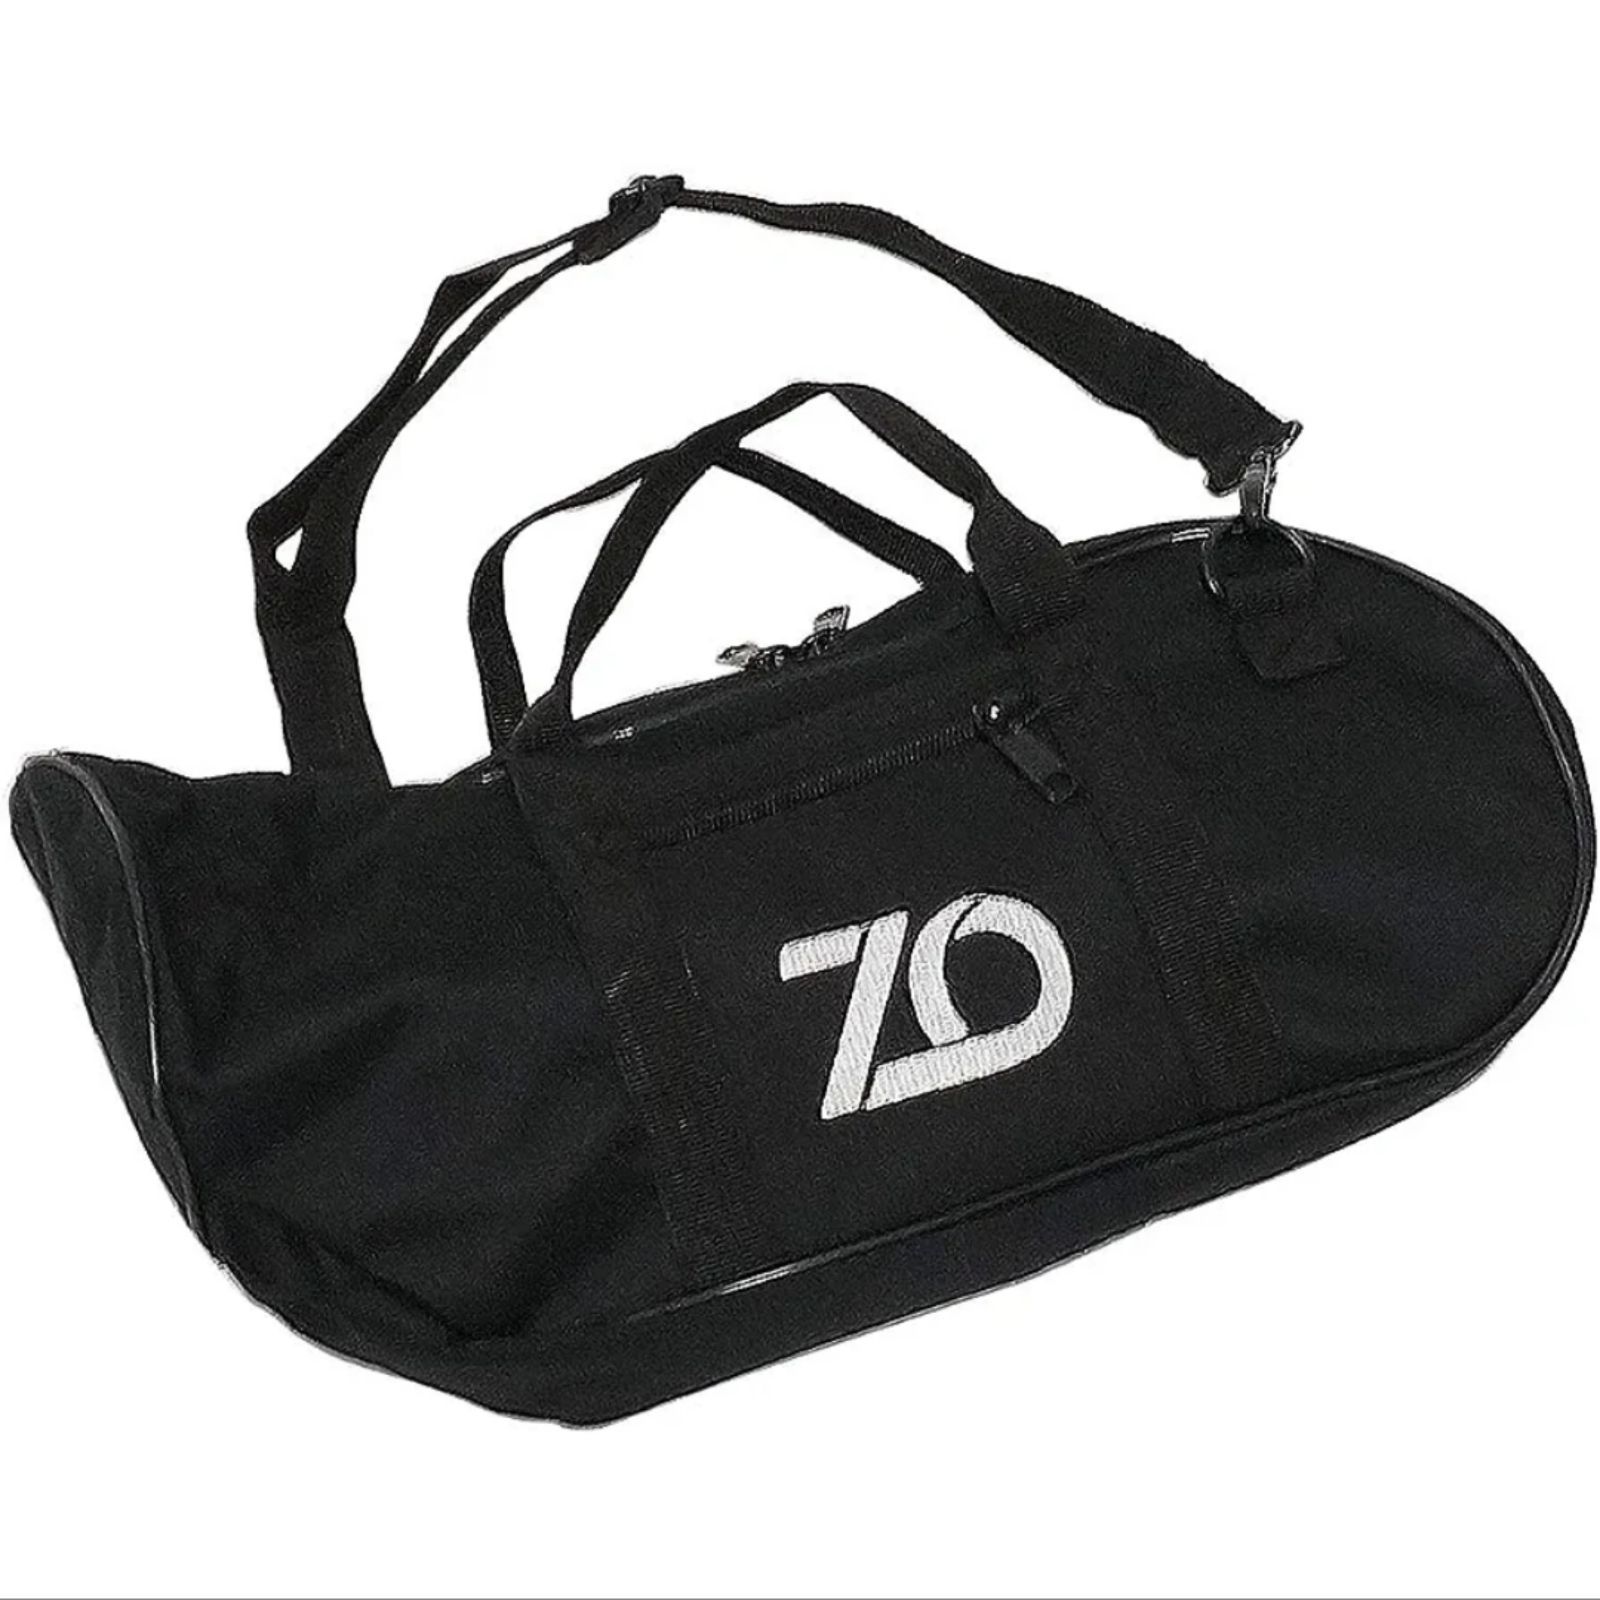 ZO ゼット・オー プラスチック製コルネット CN-05 カラー:ブラック